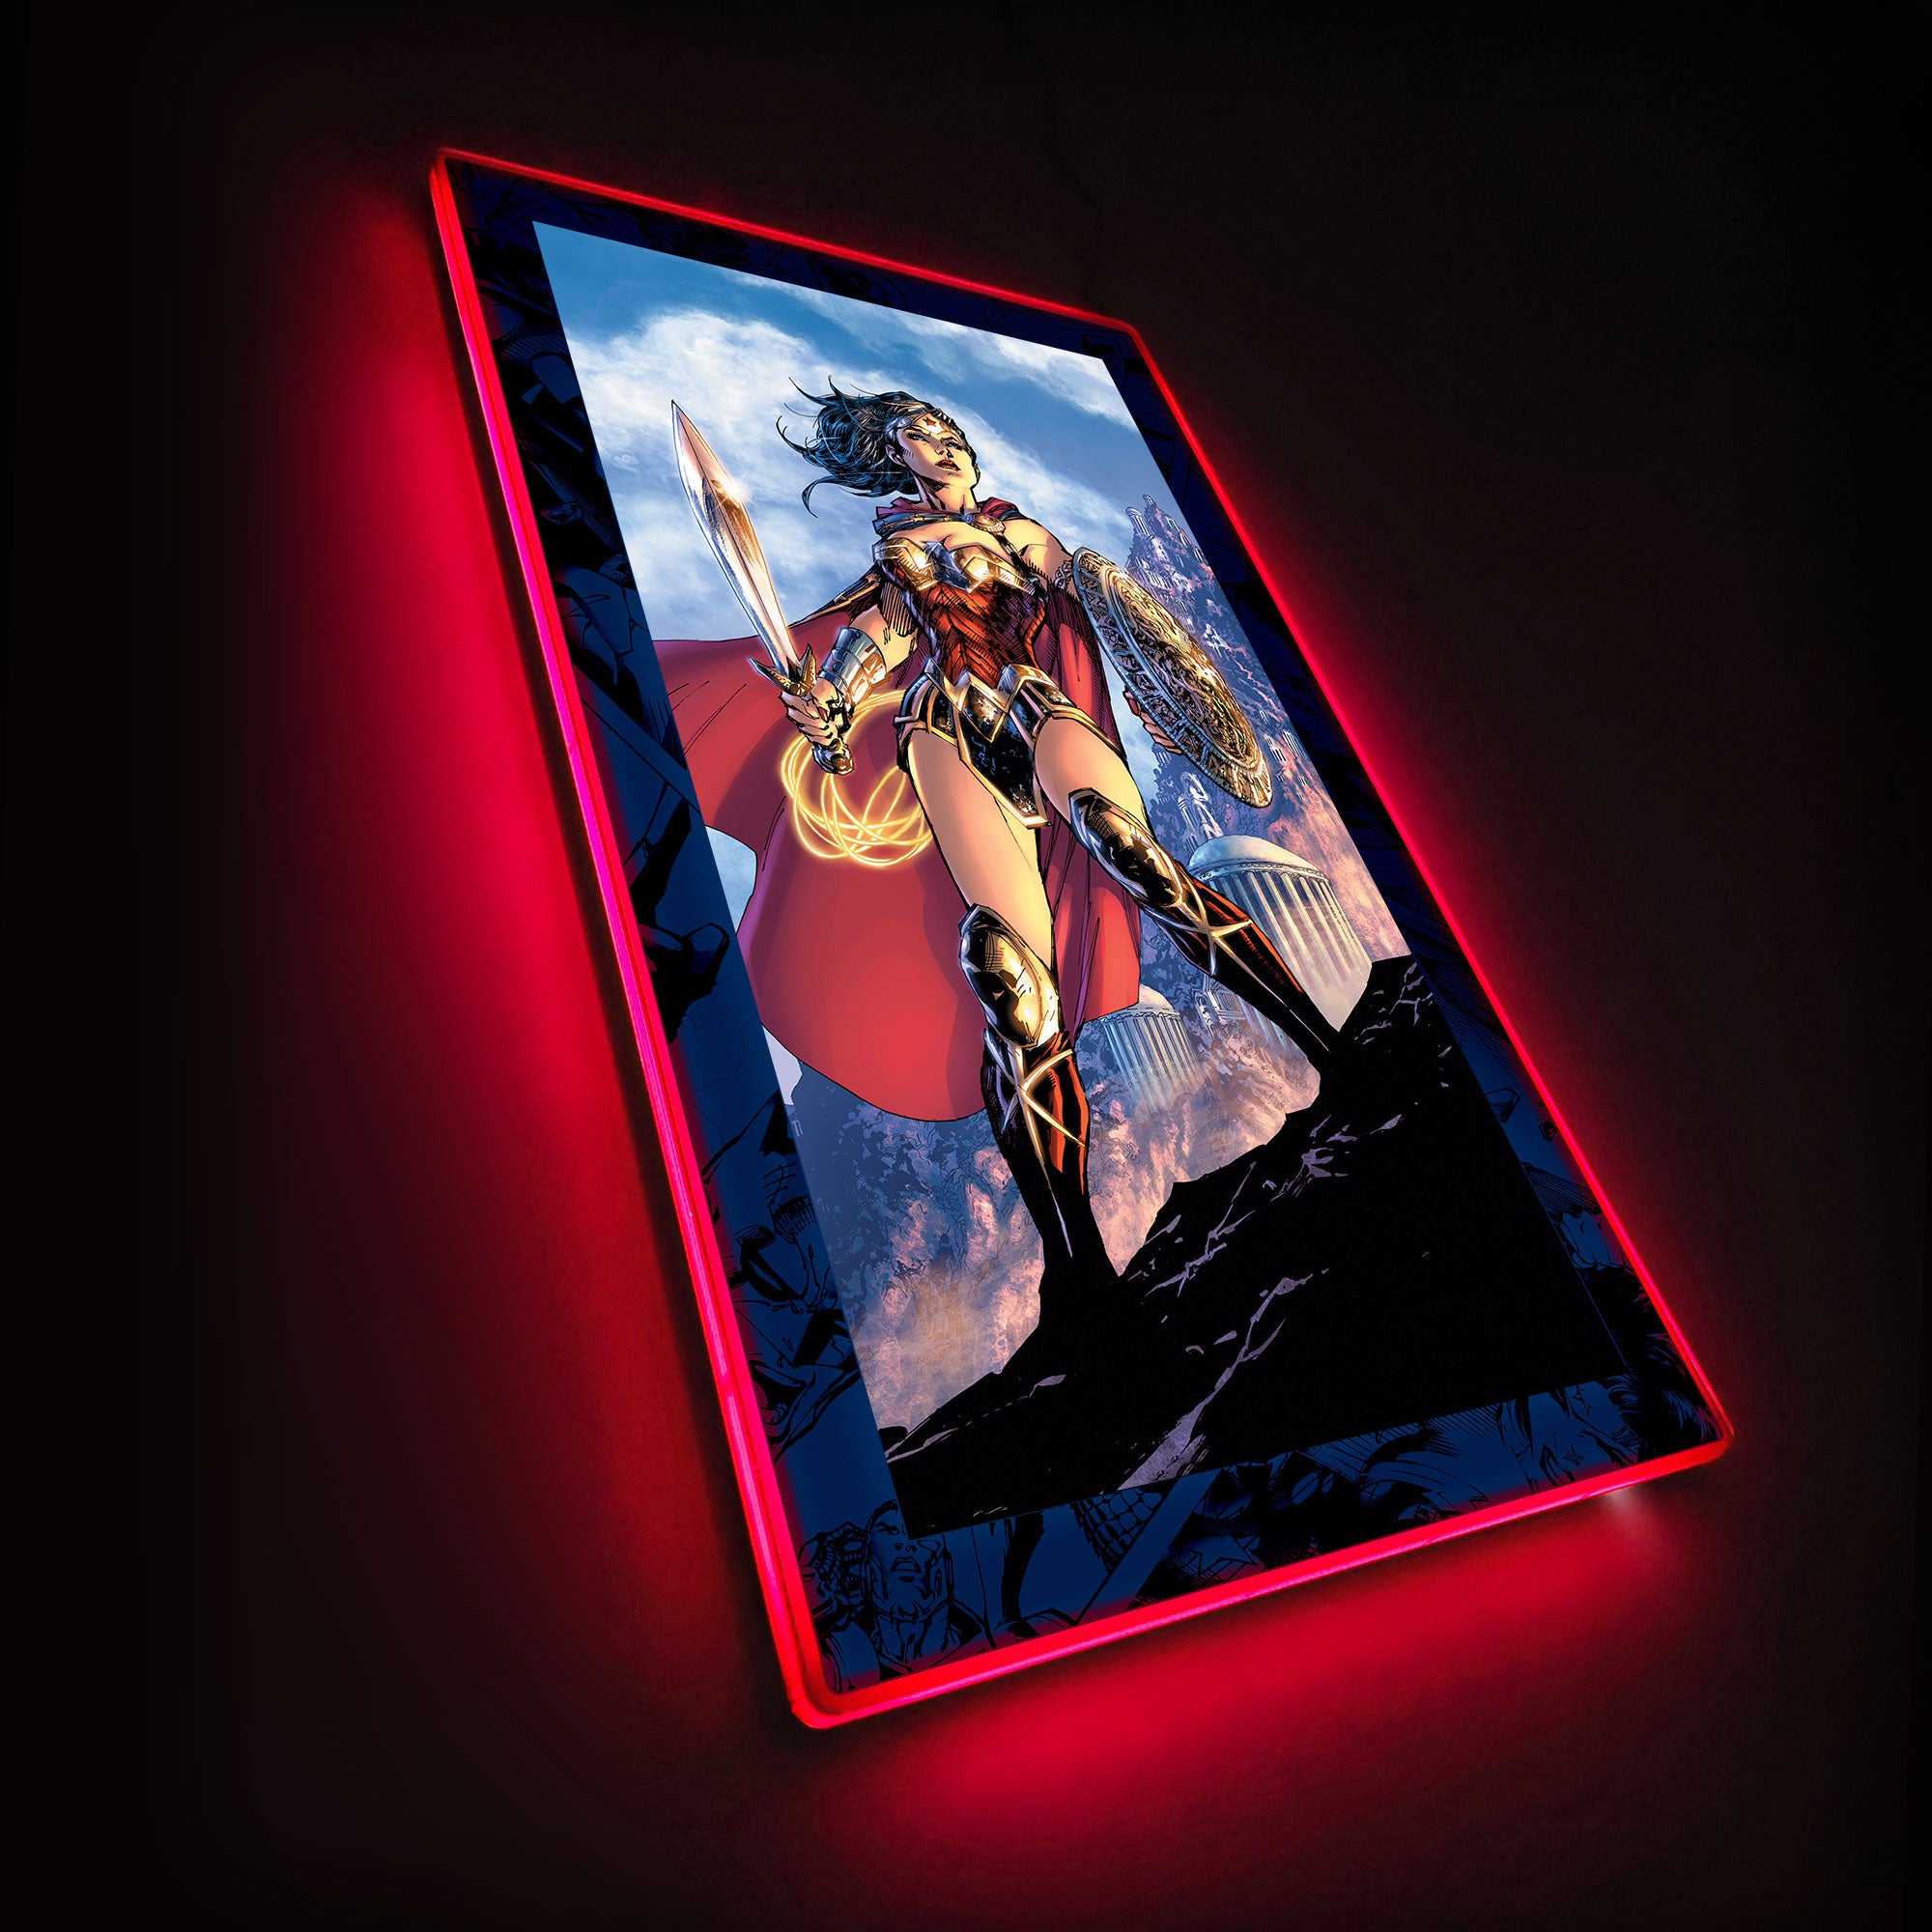 Wonder Woman™ - Retro Poster